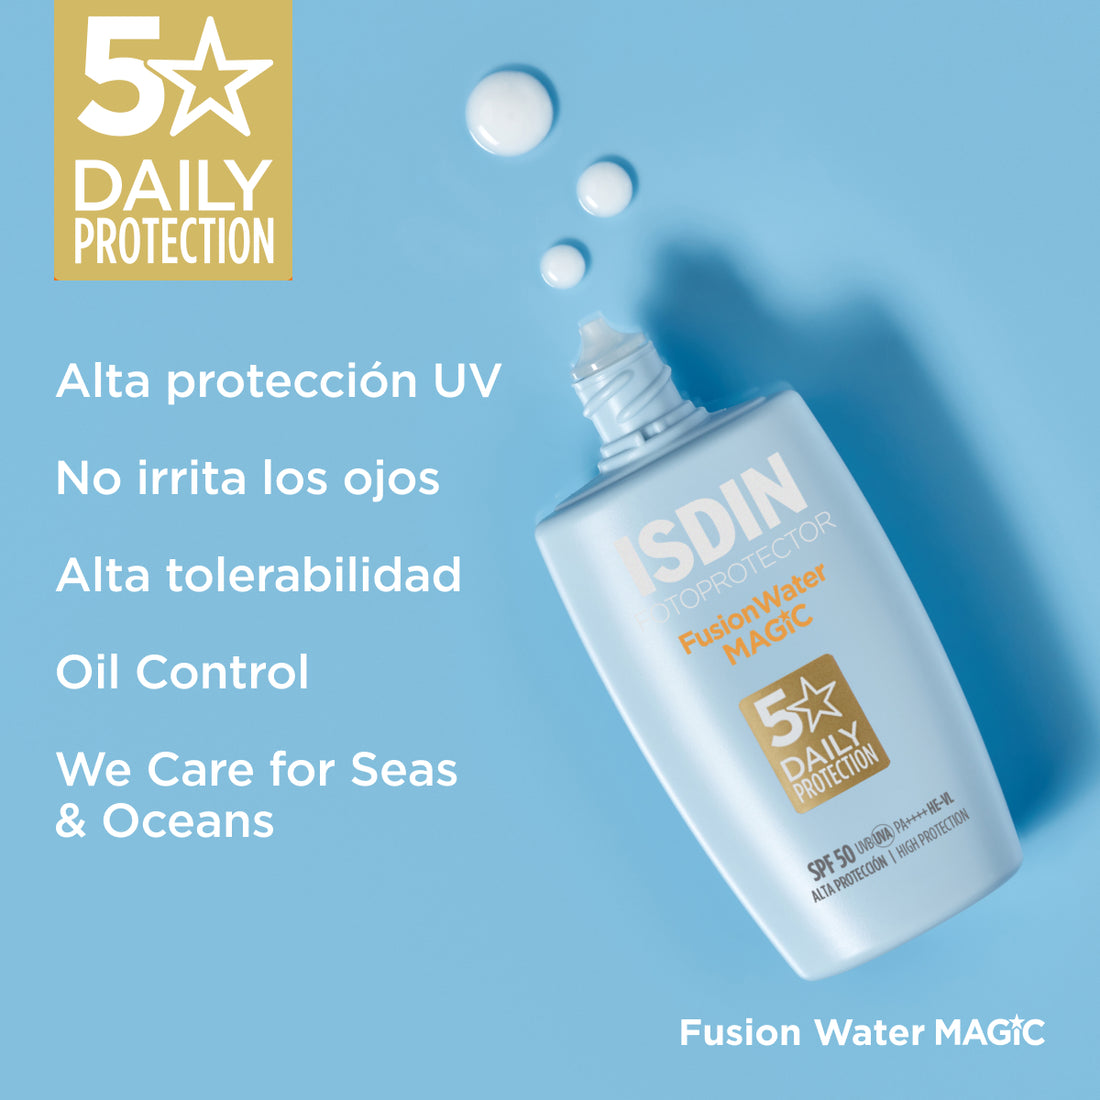 ISDIN Fusion Water MAGIC SPF 50 (50ml)